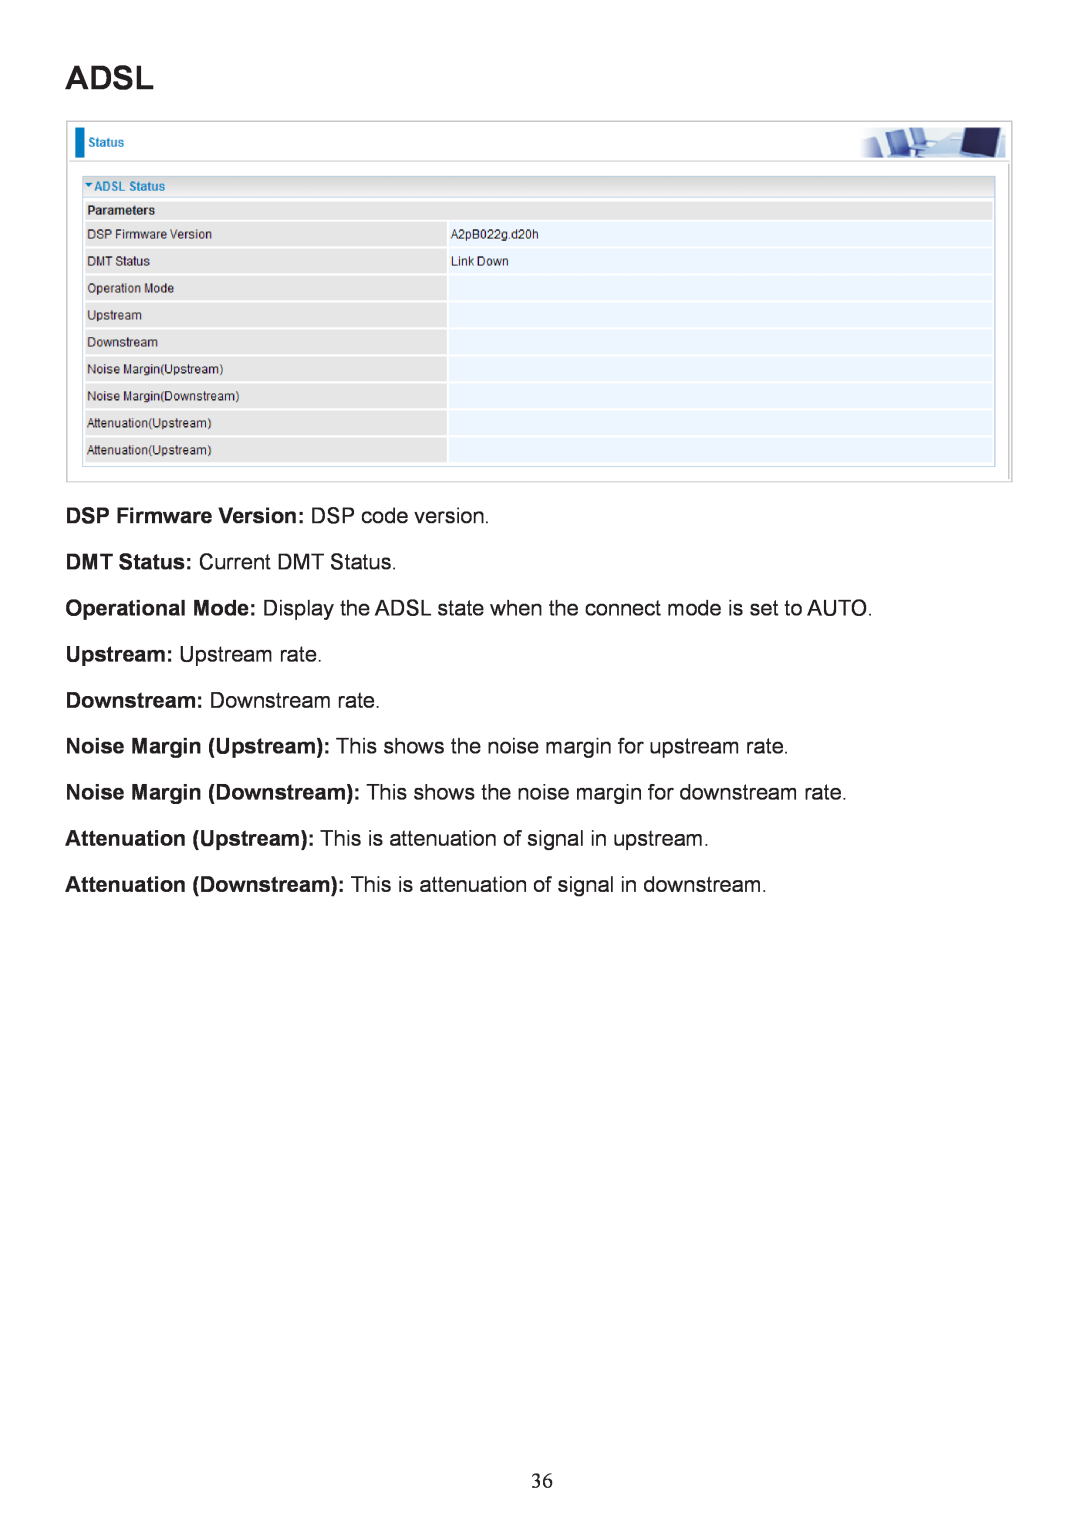 Billion Electric Company 7800 user manual Adsl, DSP Firmware Version DSP code version 